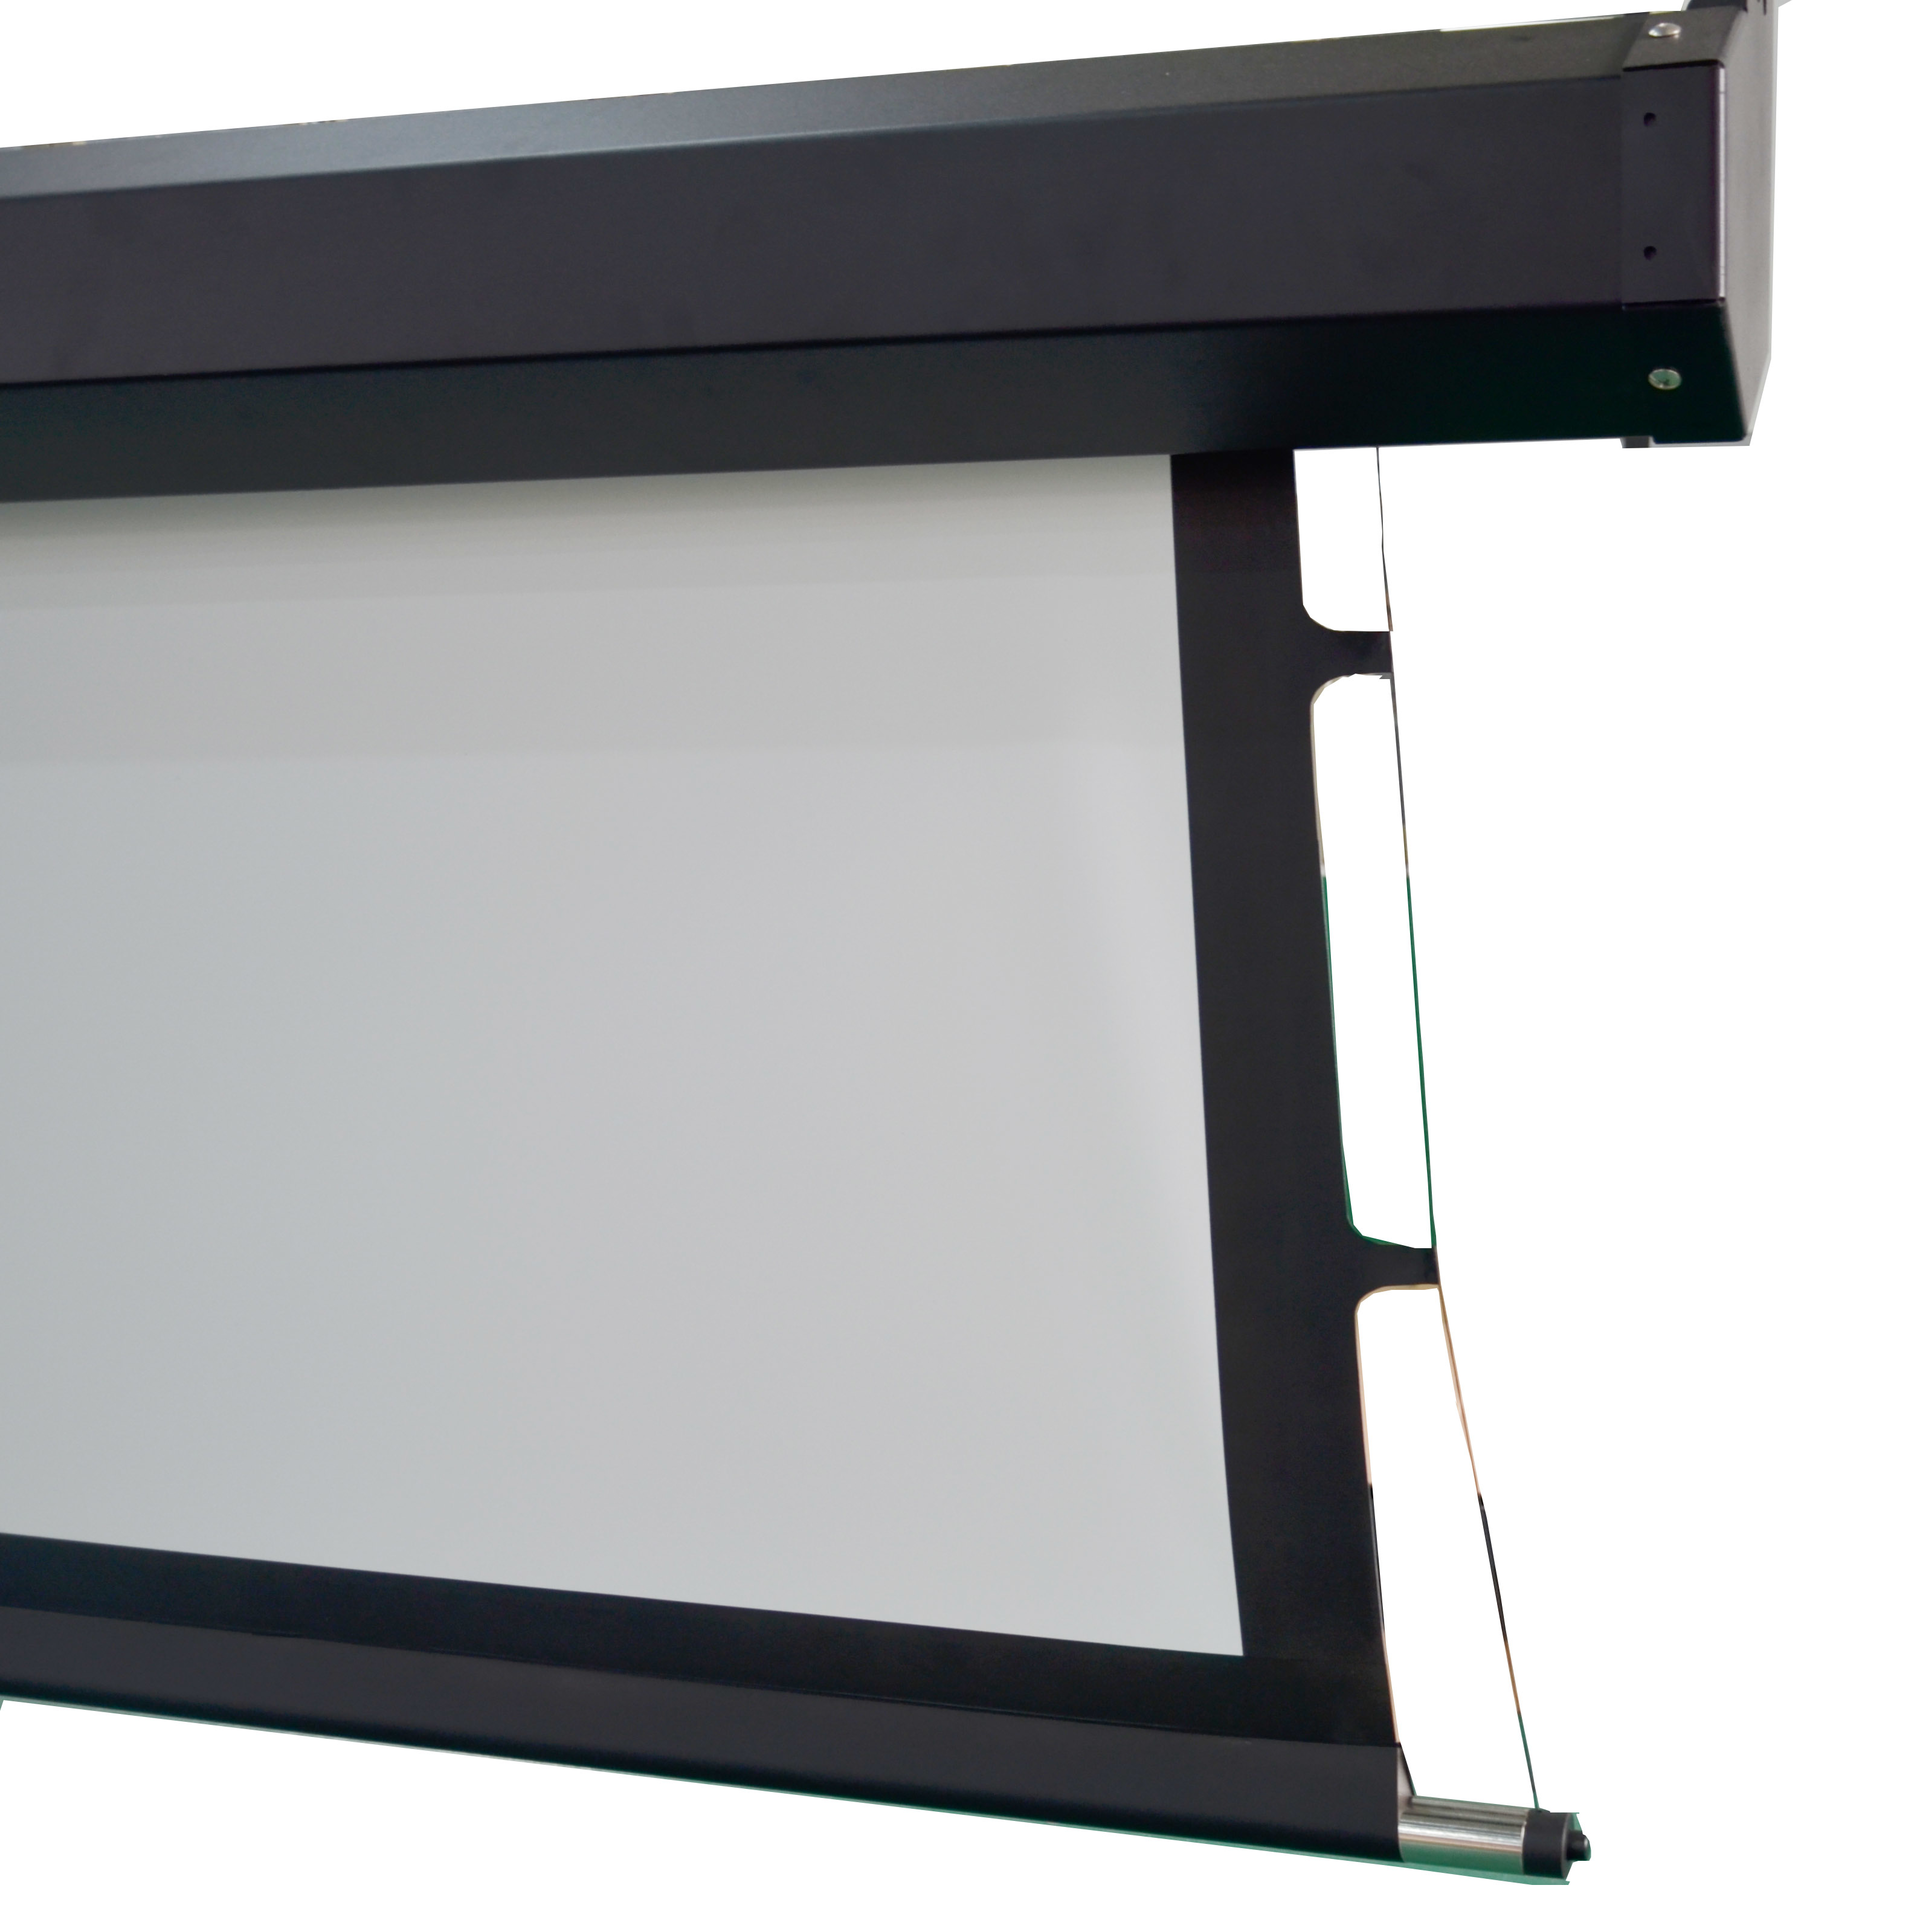 XY Screens Brand lc2 series motorized movie projector price intelligent